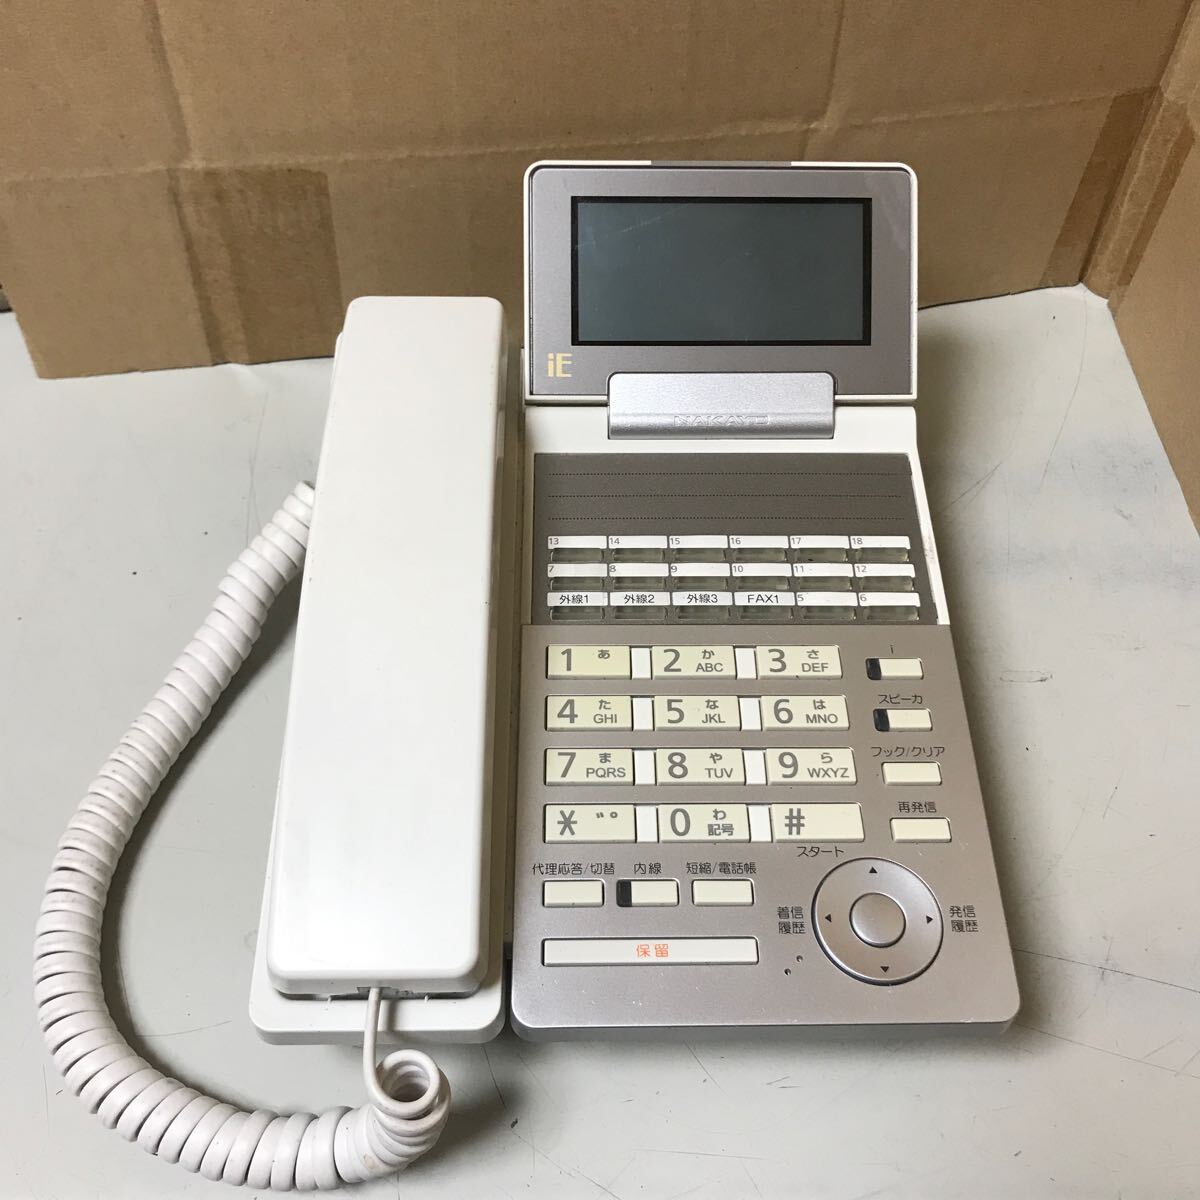 N1328/ナカヨ ビジネスフォン NYC-18iE-SD(W)2 電話機_画像1